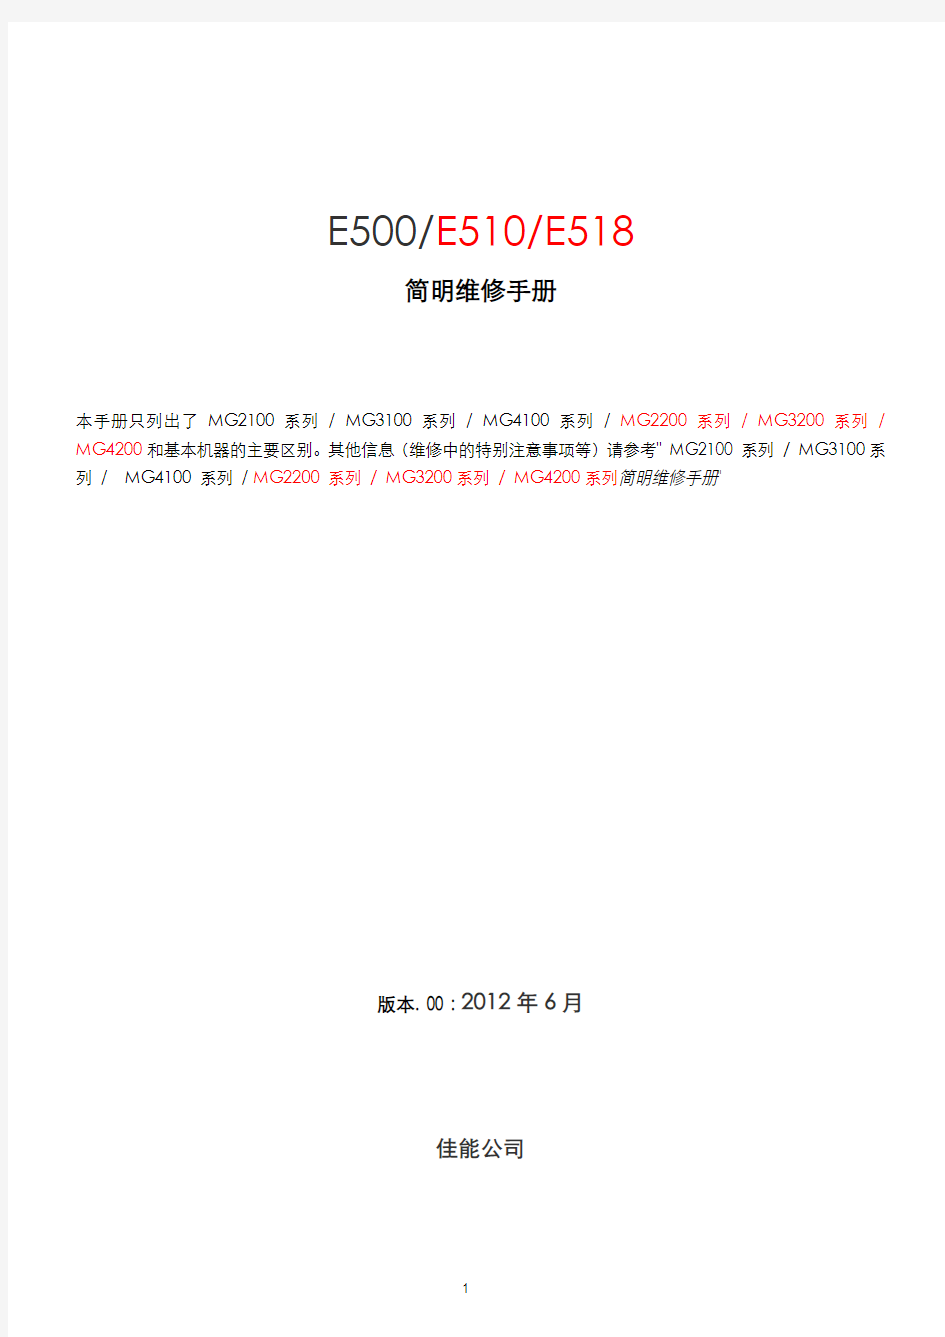 E518维修手册(中文版)